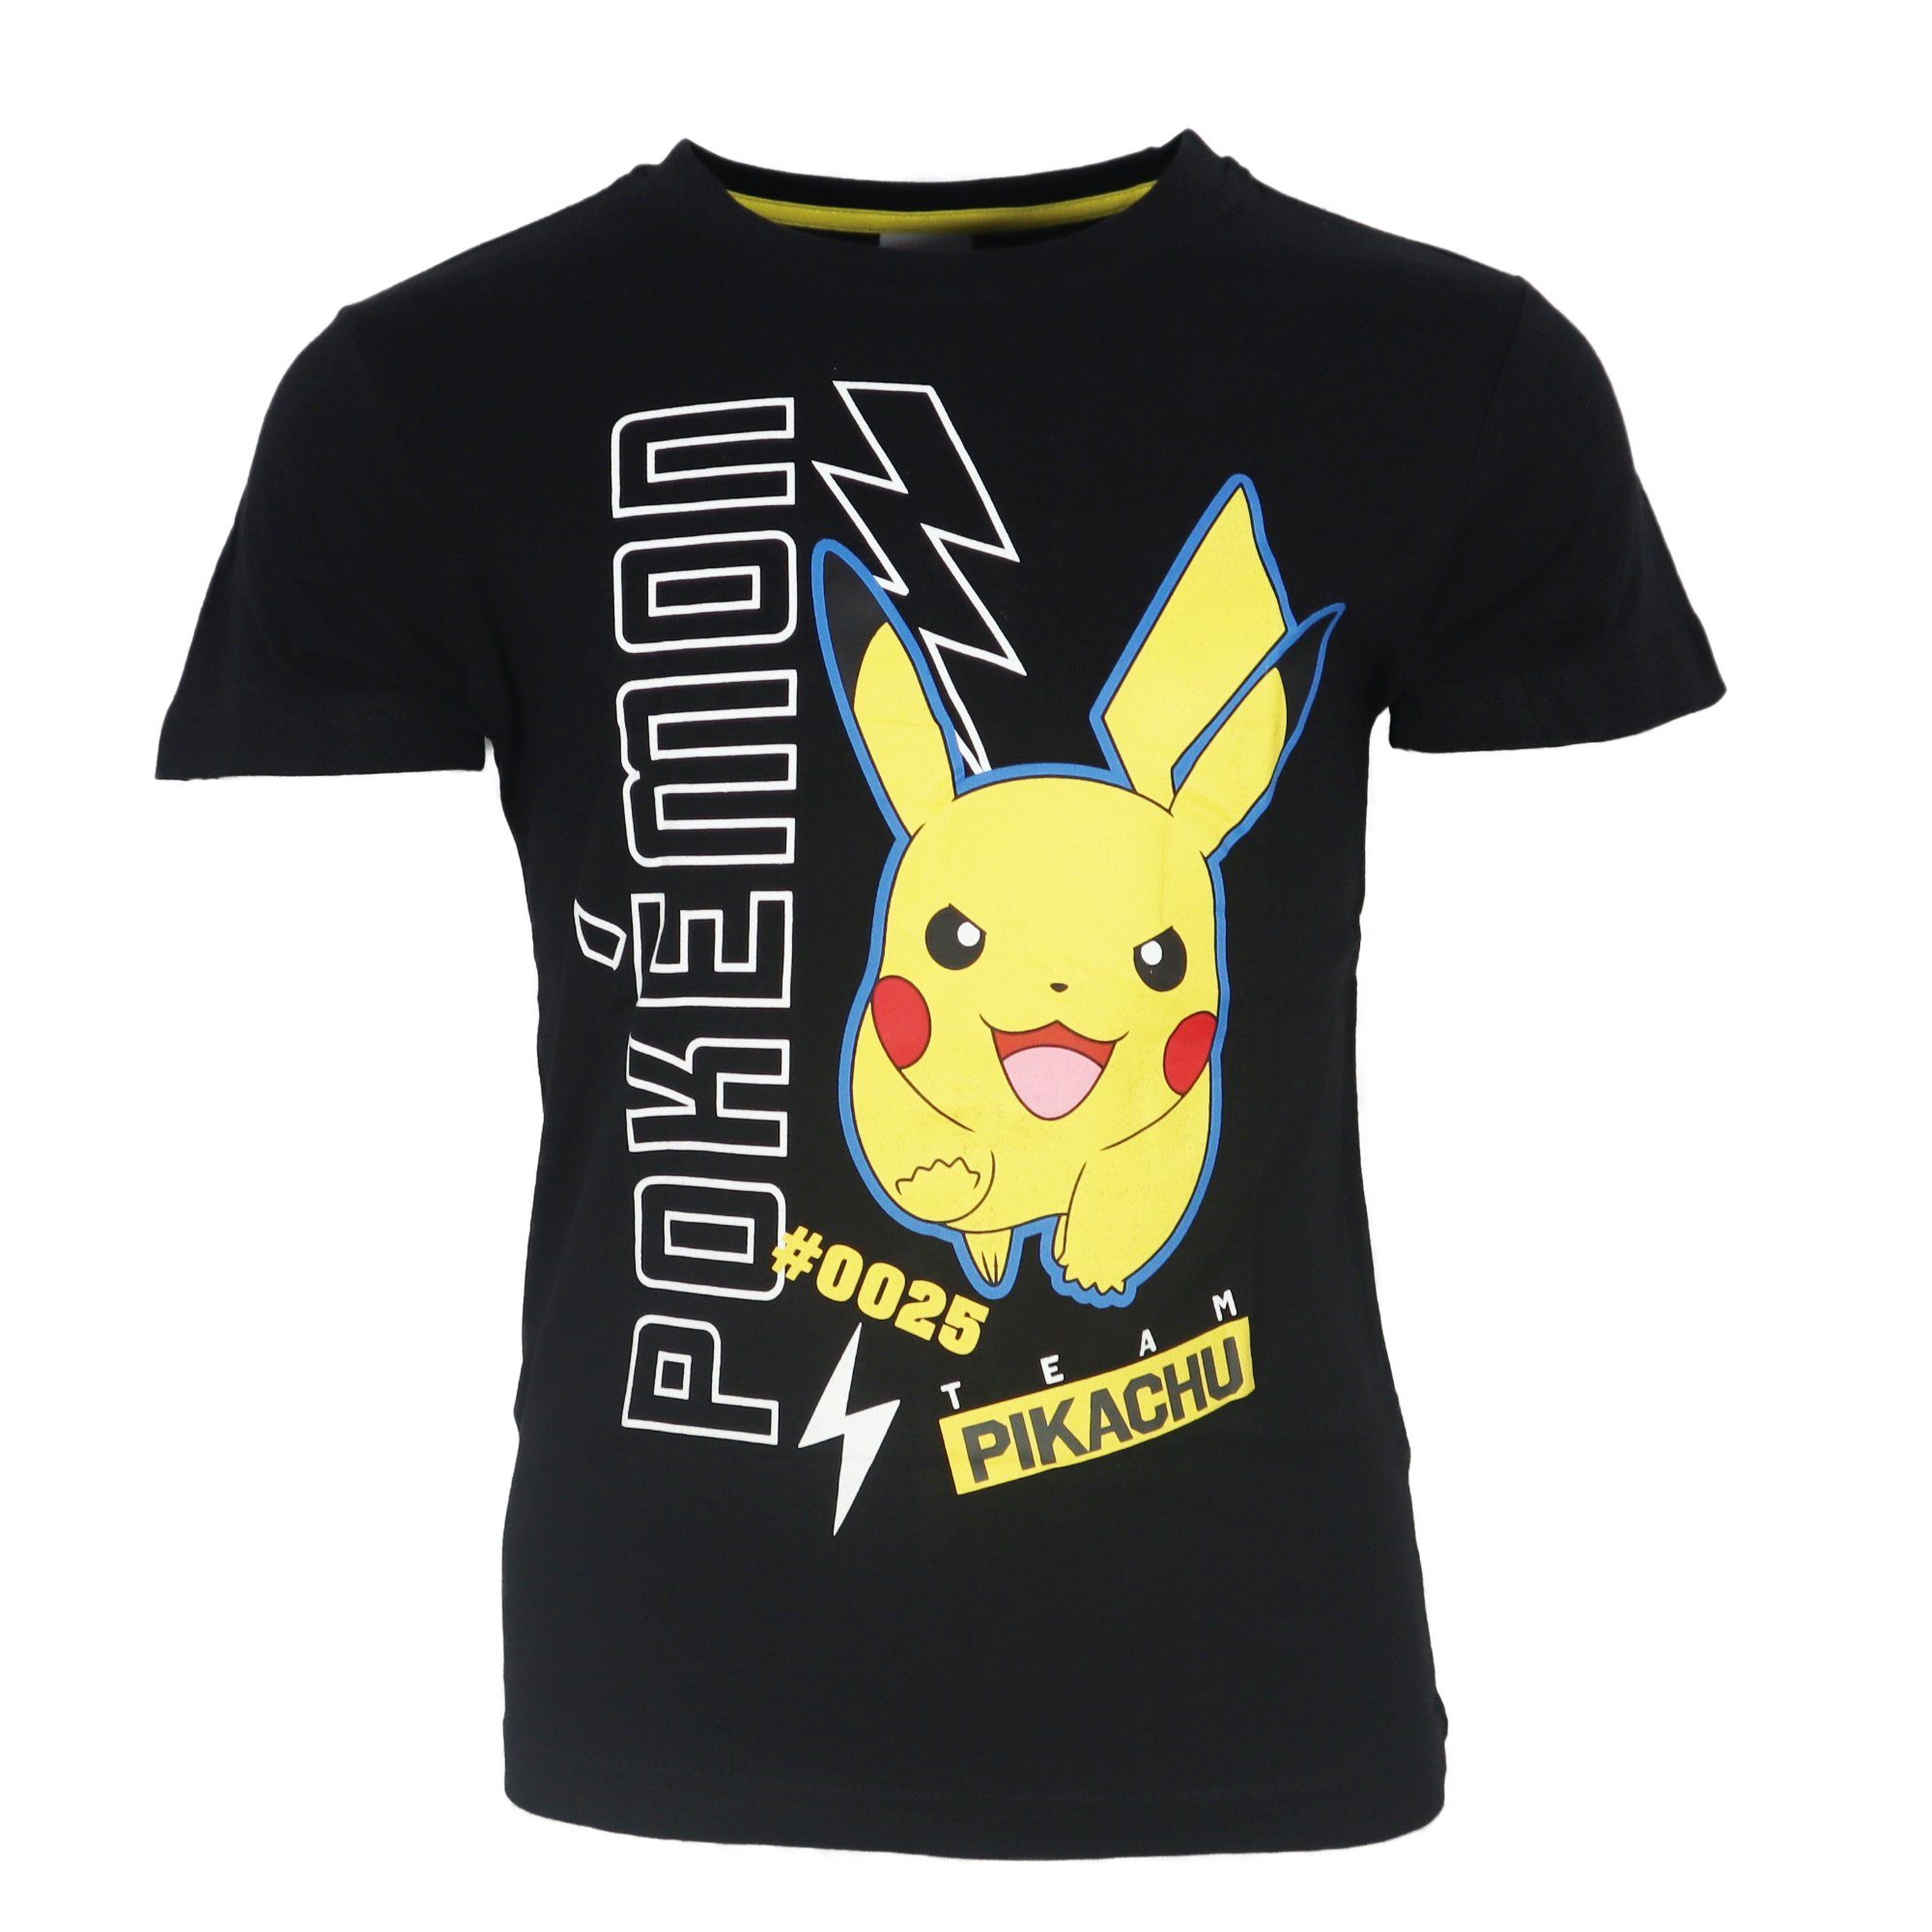 POKÉMON Print-Shirt Pokemon Pikachu and Friends Kinder T-Shirt Kurzarm Shirt Gr. 110 bis 152, 100% Baumwolle Schwarz